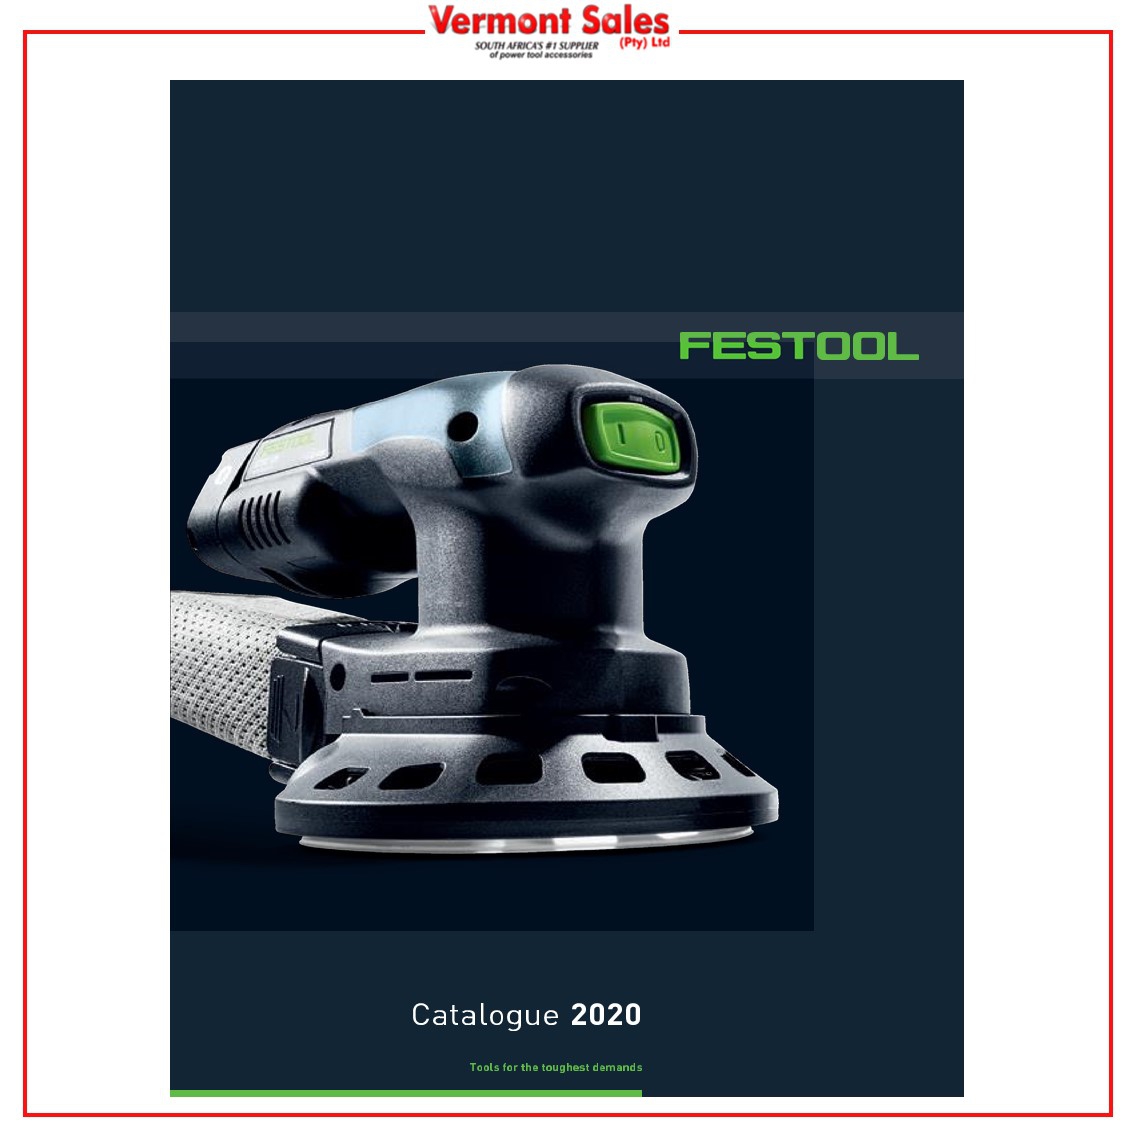 VERMONT - Festool Main Catalog 2020 Catalogue